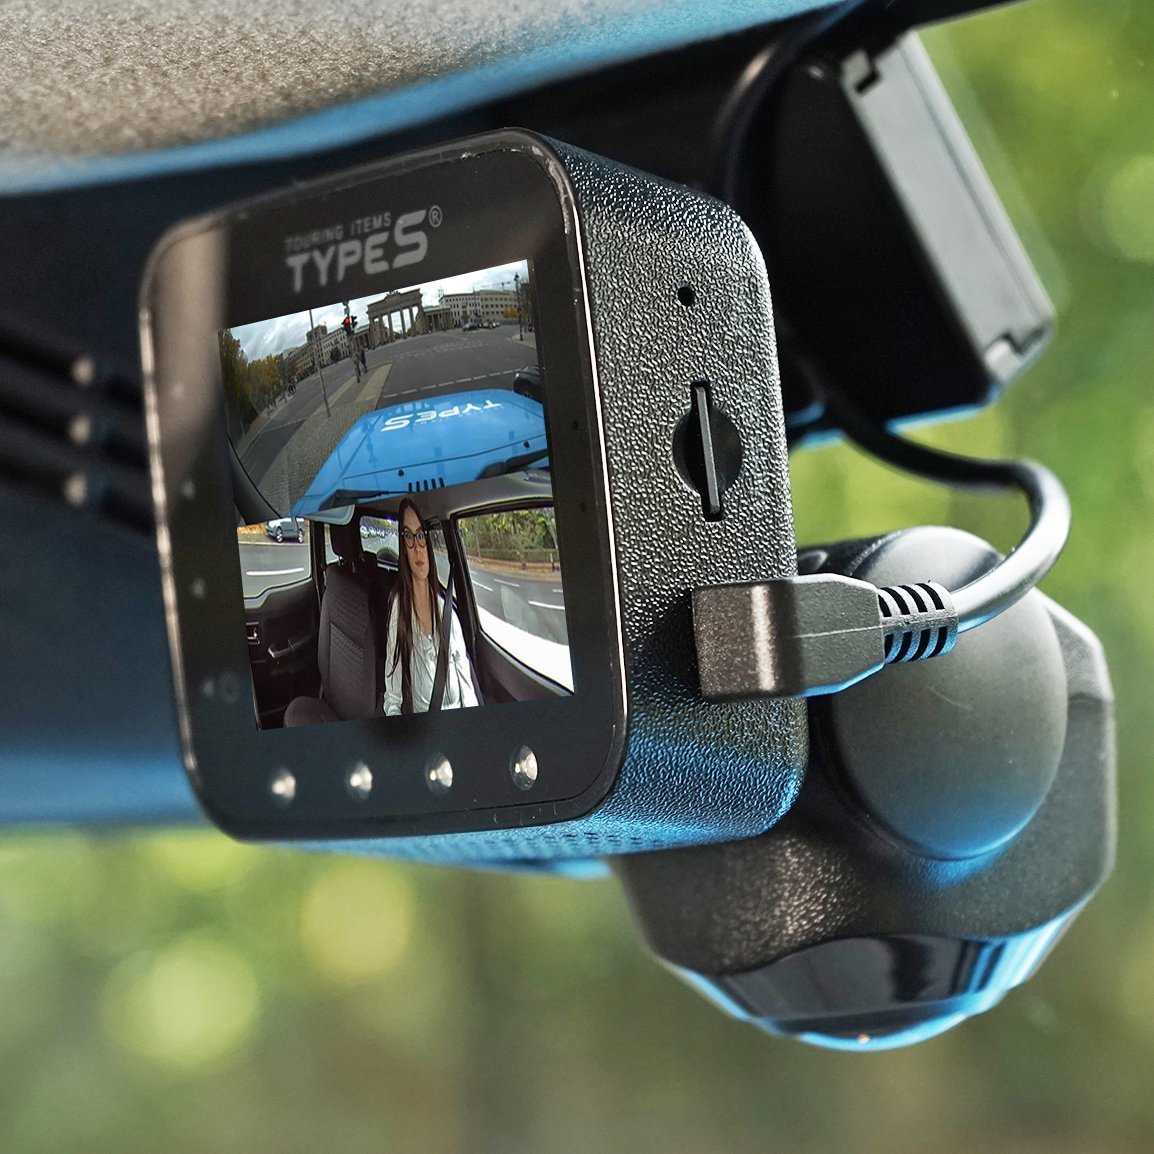 Full HD Dashcam mit 360 Grad Rundum Blick - TypeS presented by Horizon Brands Europe